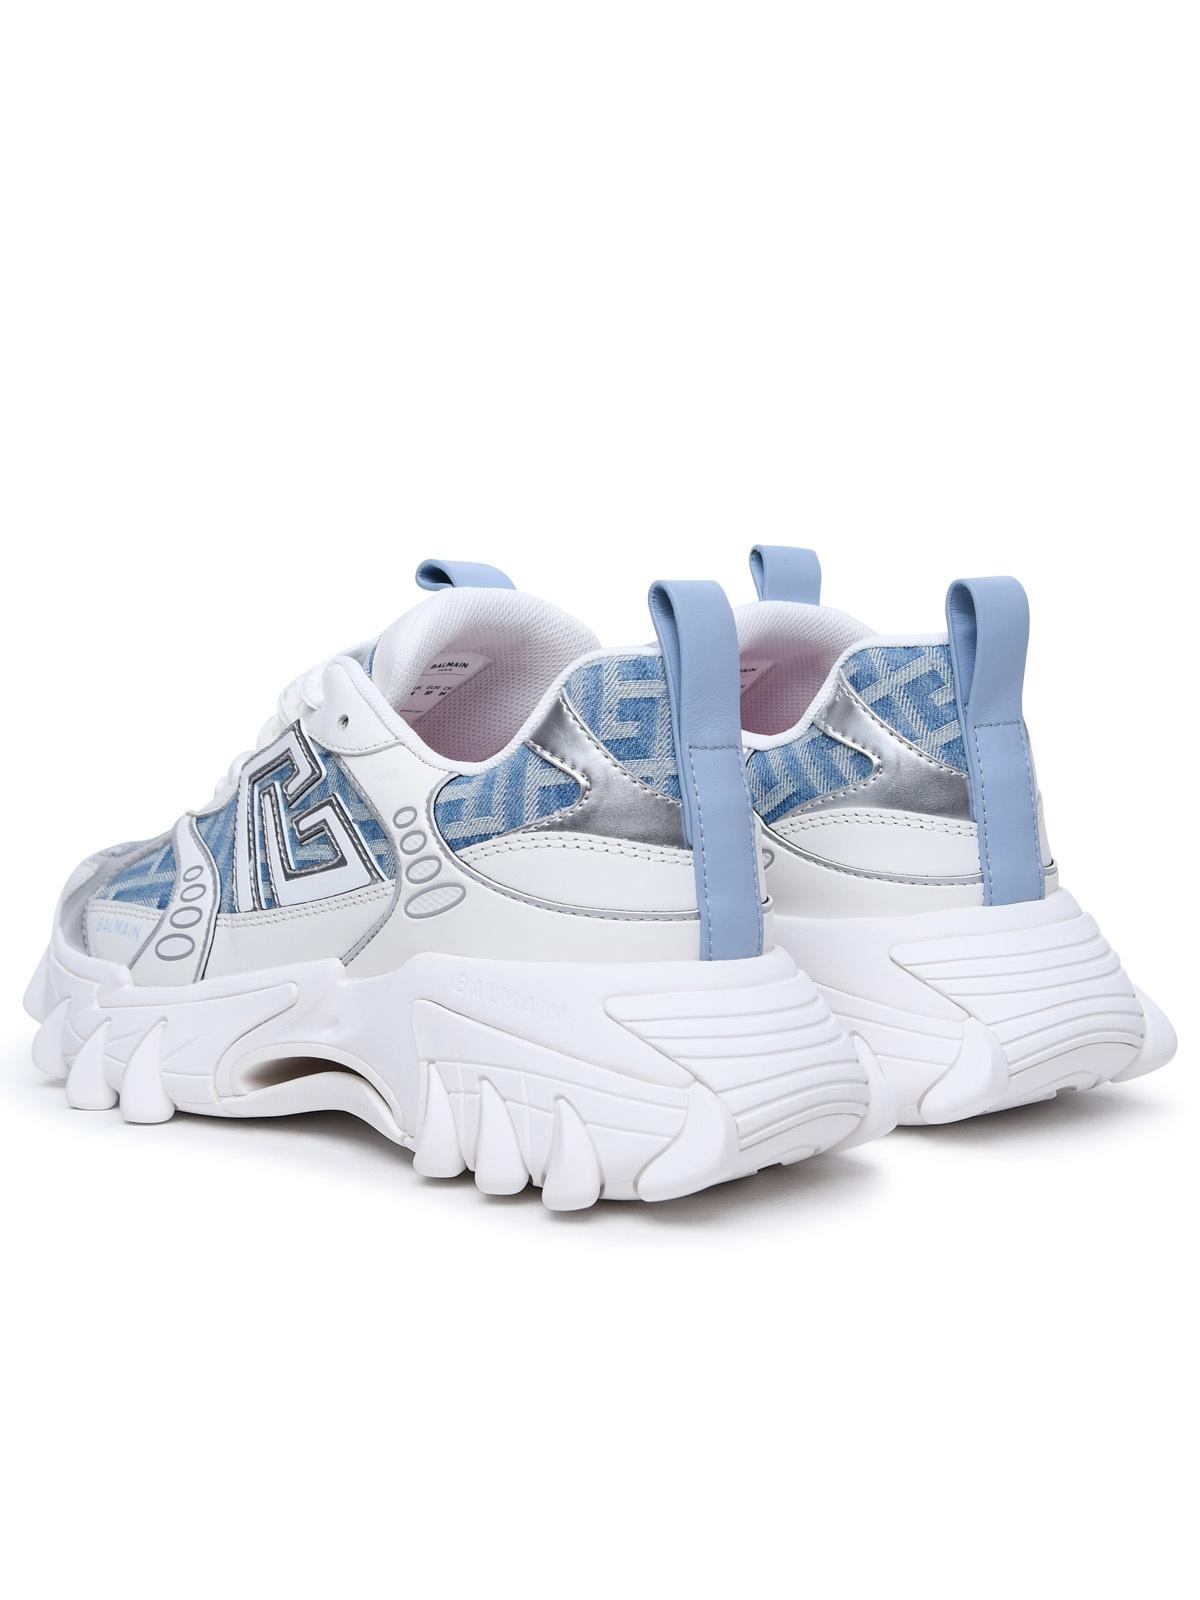 Balmain 'B East' Blue Cotton Blend Sneakers - 4